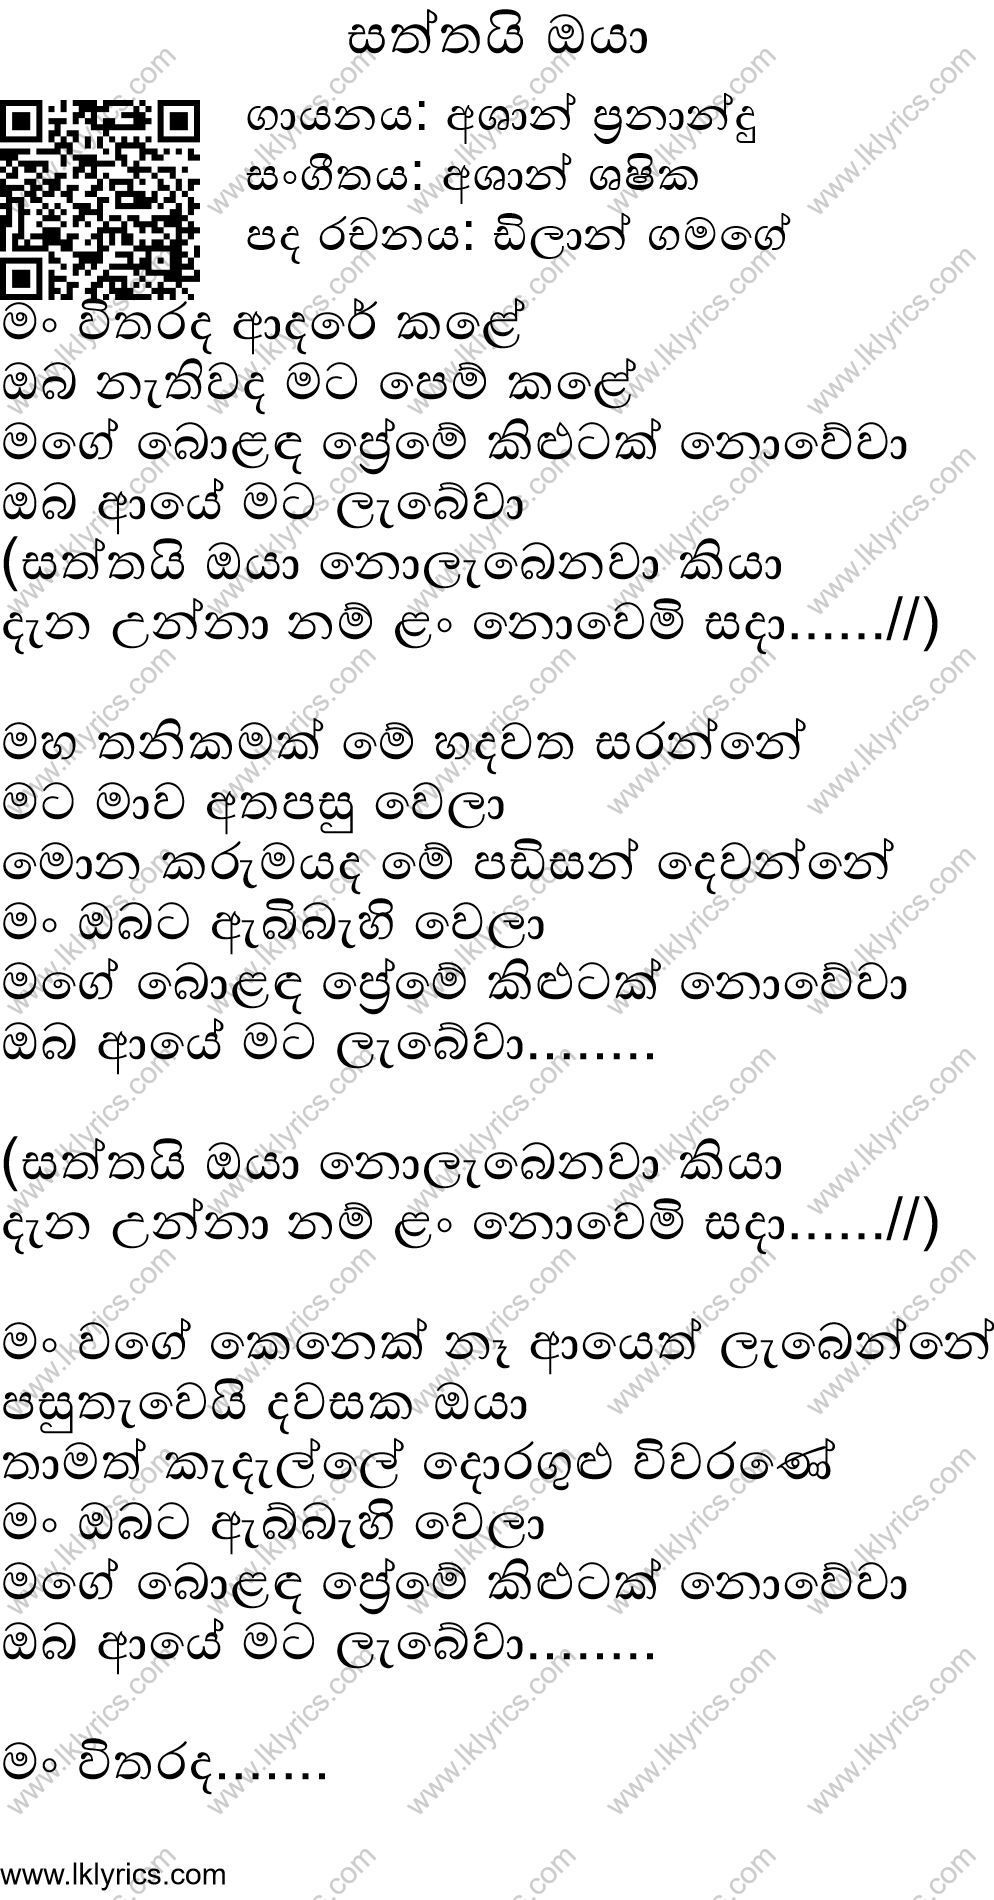 Saththai Oya Lyrics - LK Lyrics